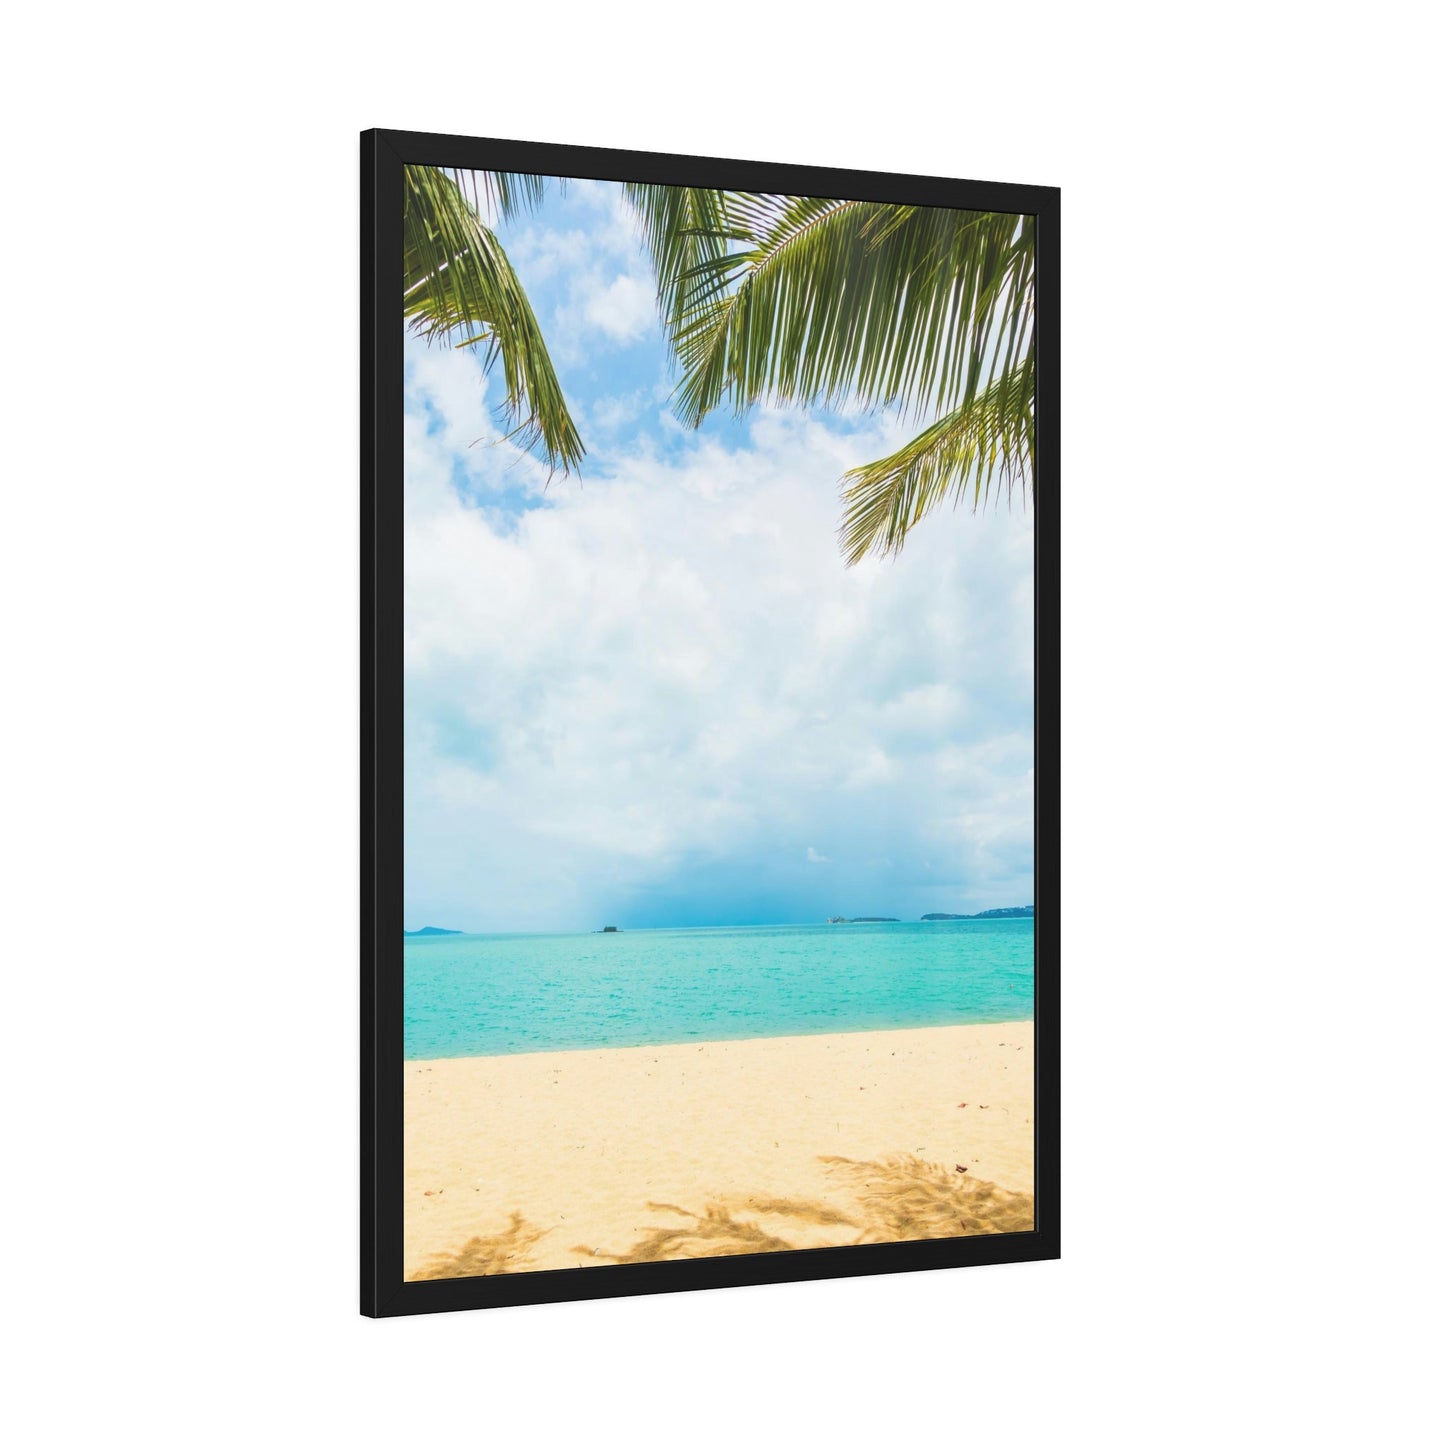 Seashore Sanctuary: Art Print of a Tranquil Island Beach Scene on a Framed Canvas